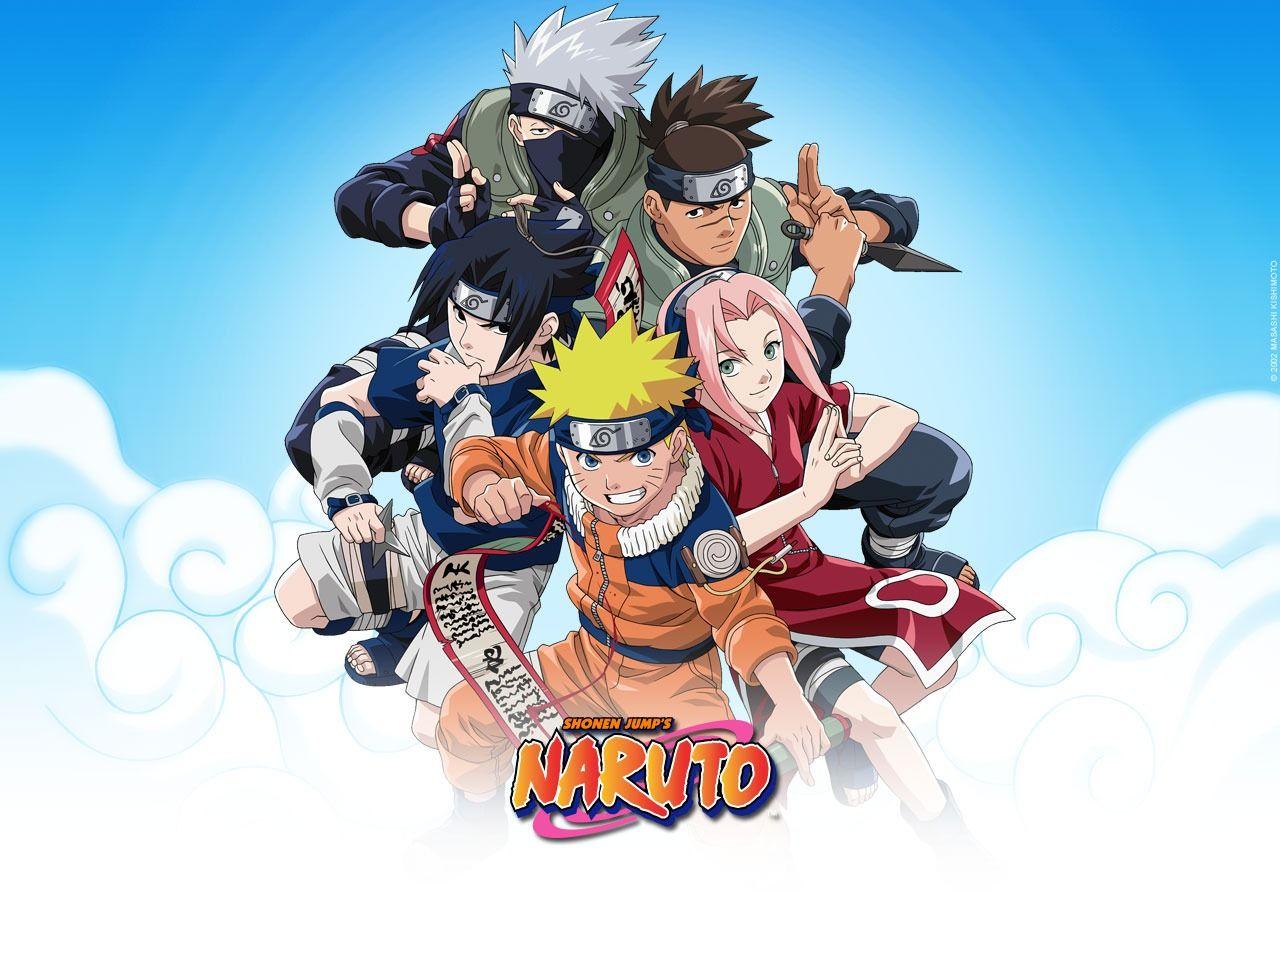 Naruto Wallpaper Naruto Anime Animated Wallpaper in jpg format